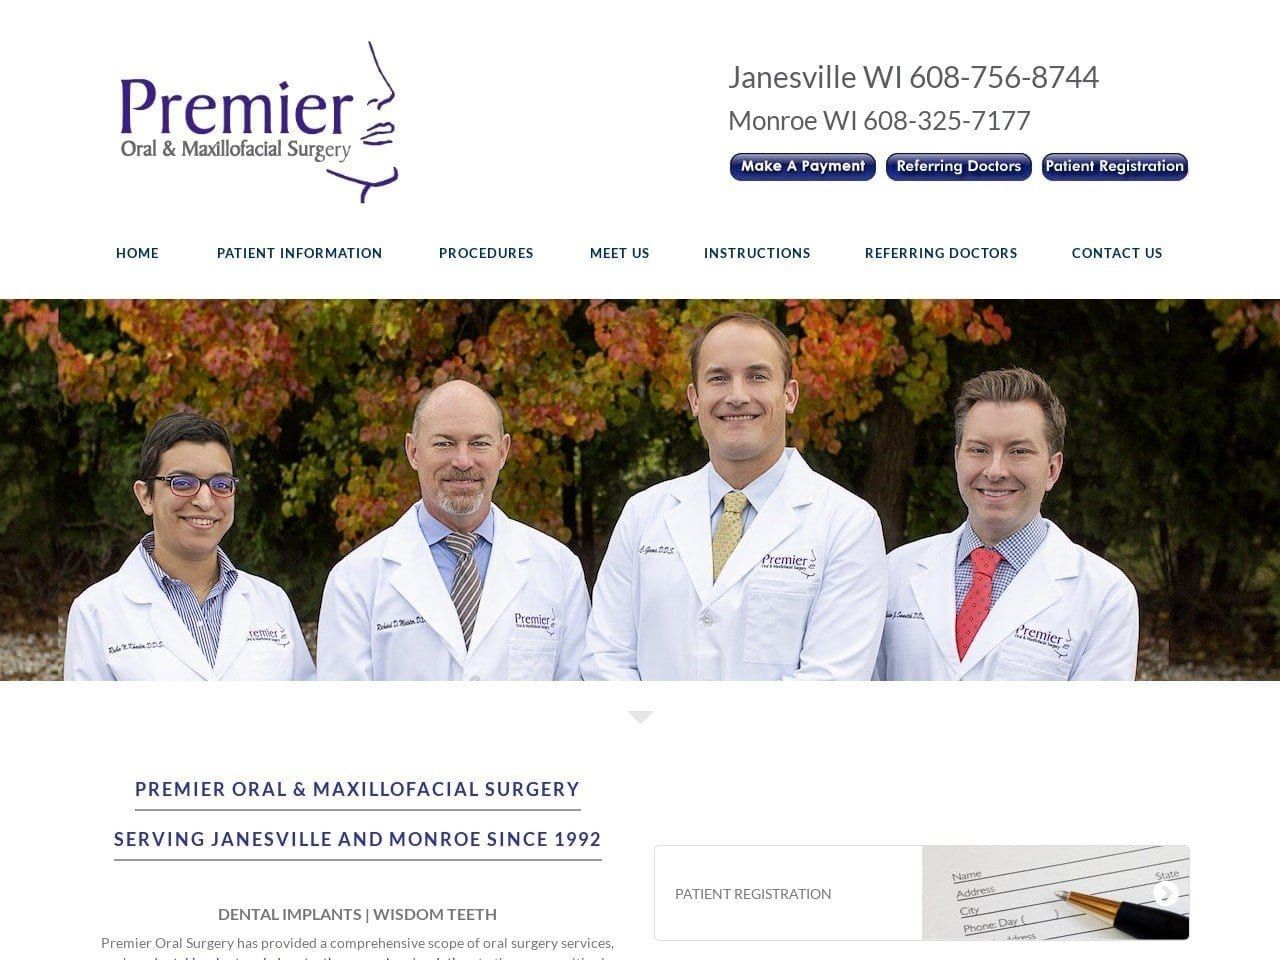 Premier Oral Surgery Cisler Terry D DDS Website Screenshot from premieroralmaxsurgery.com